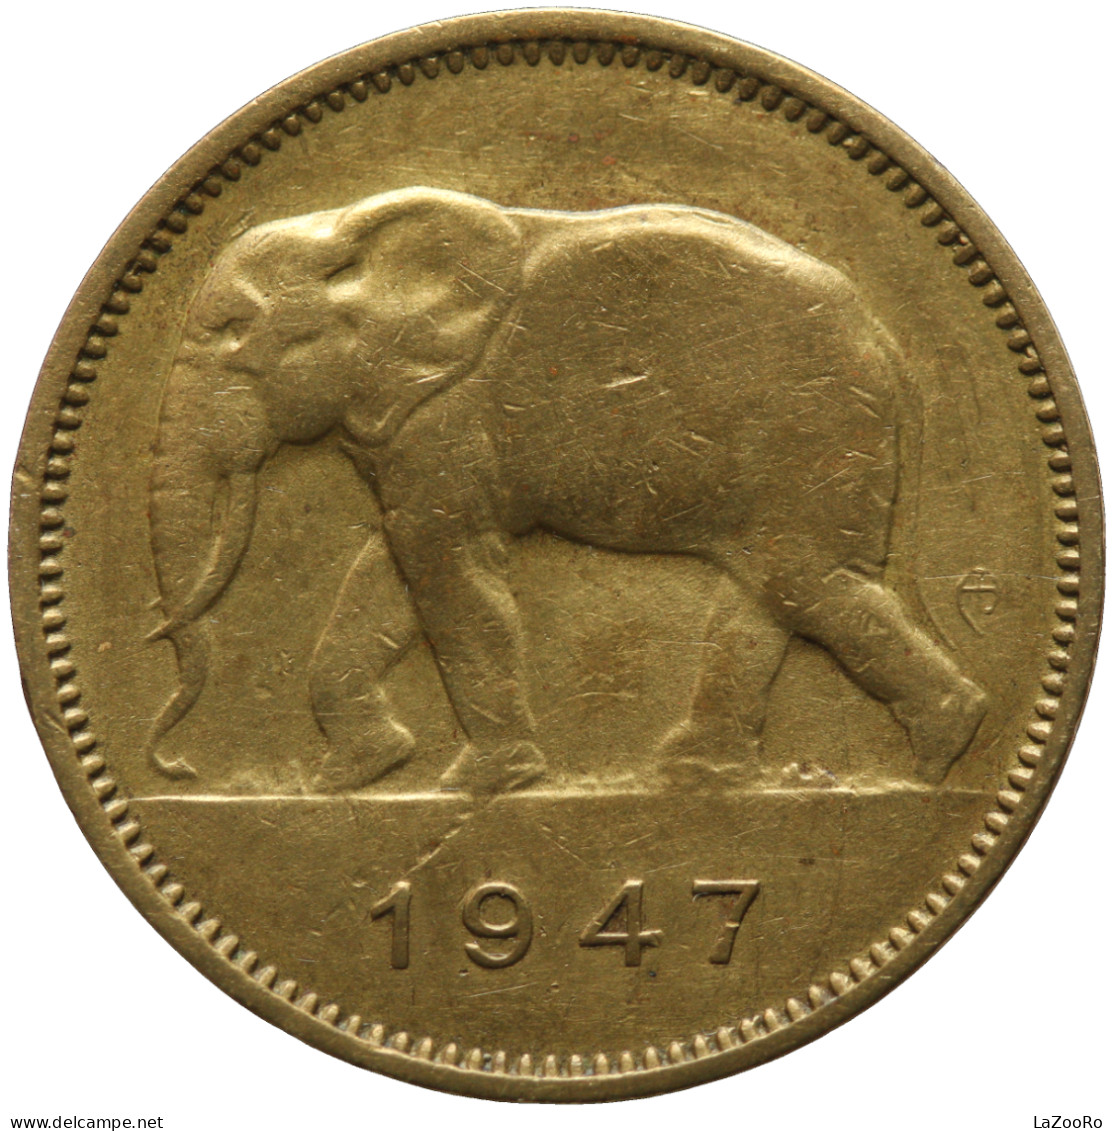 LaZooRo: Belgian Congo 2 Francs 1947 XF - 1945-1951: Regencia